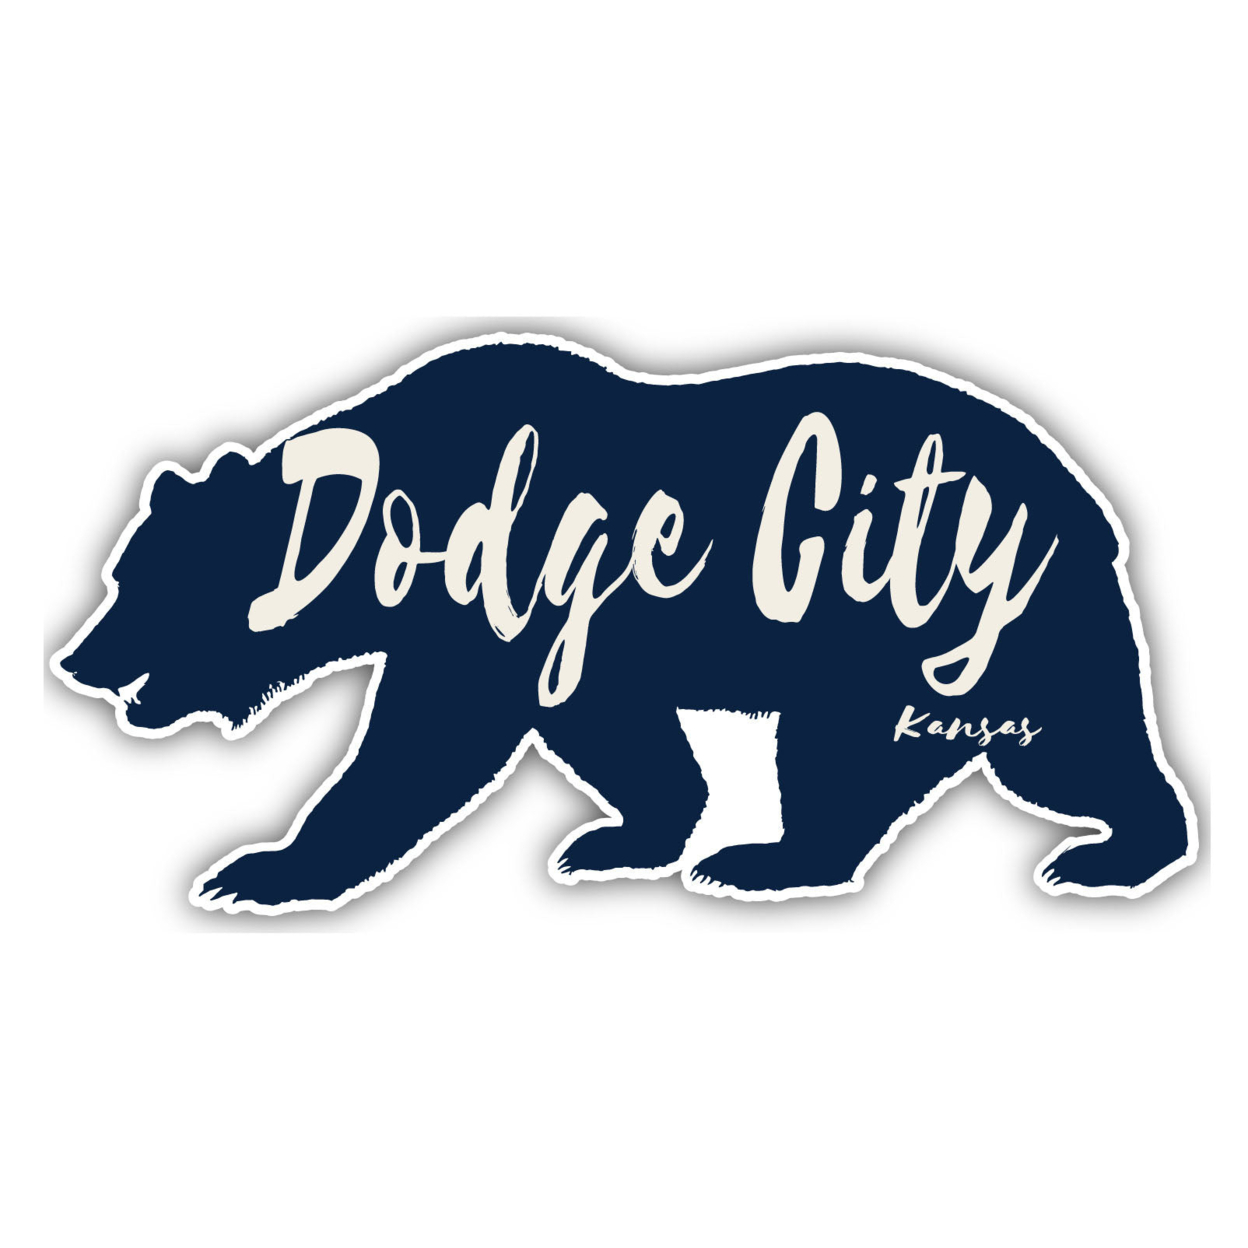 Dodge City Kansas Souvenir Decorative Stickers (Choose Theme And Size) - 4-Pack, 12-Inch, Tent